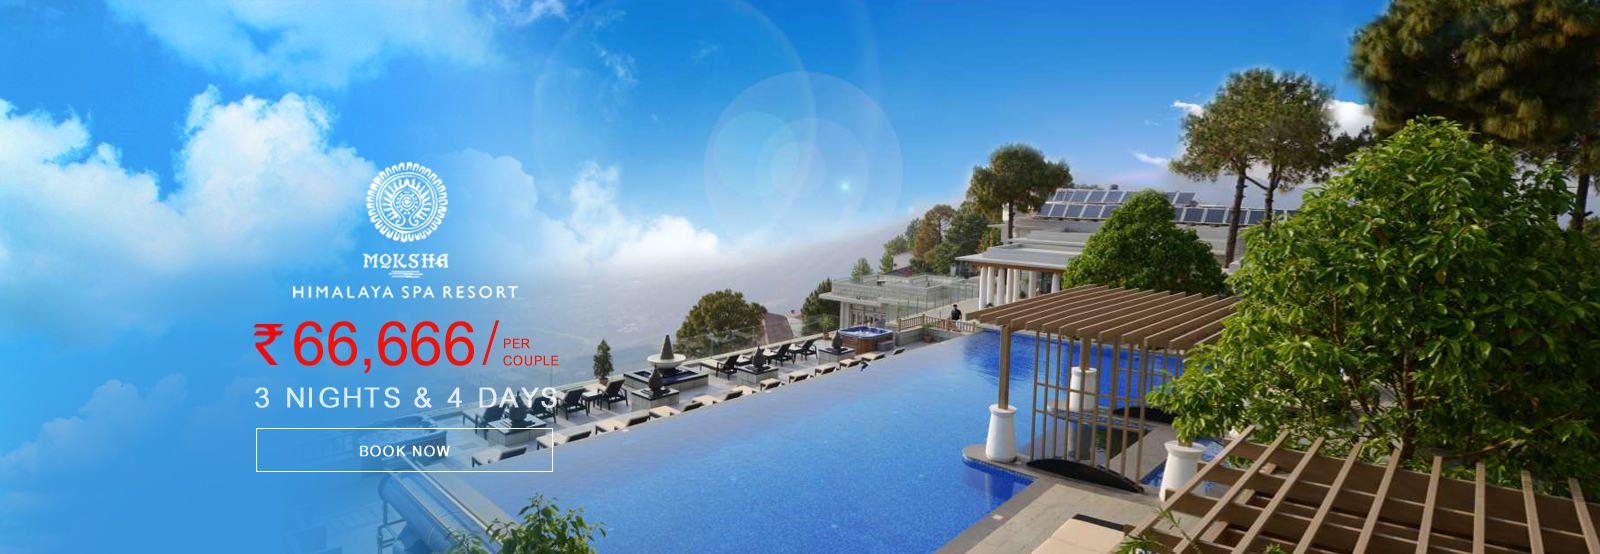 Moksha Himalaya SPA Resort